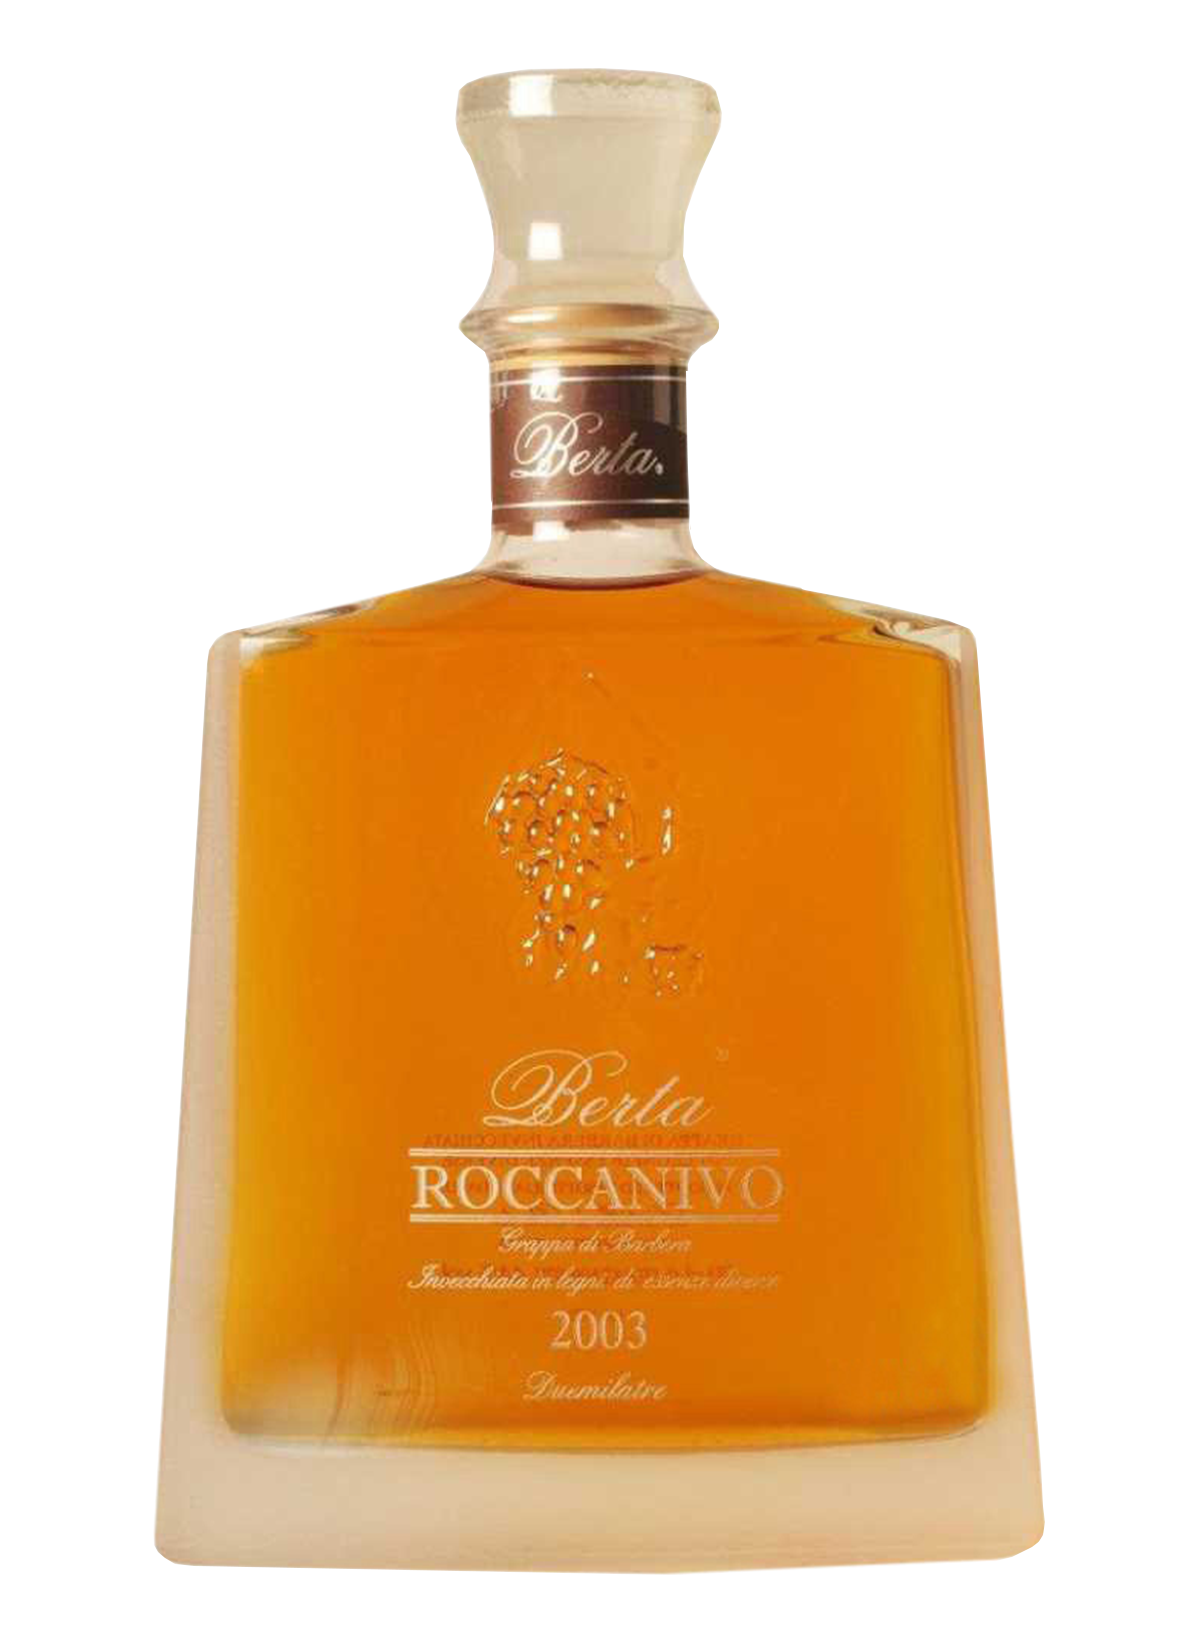 Roccanivo Distillerie Berta